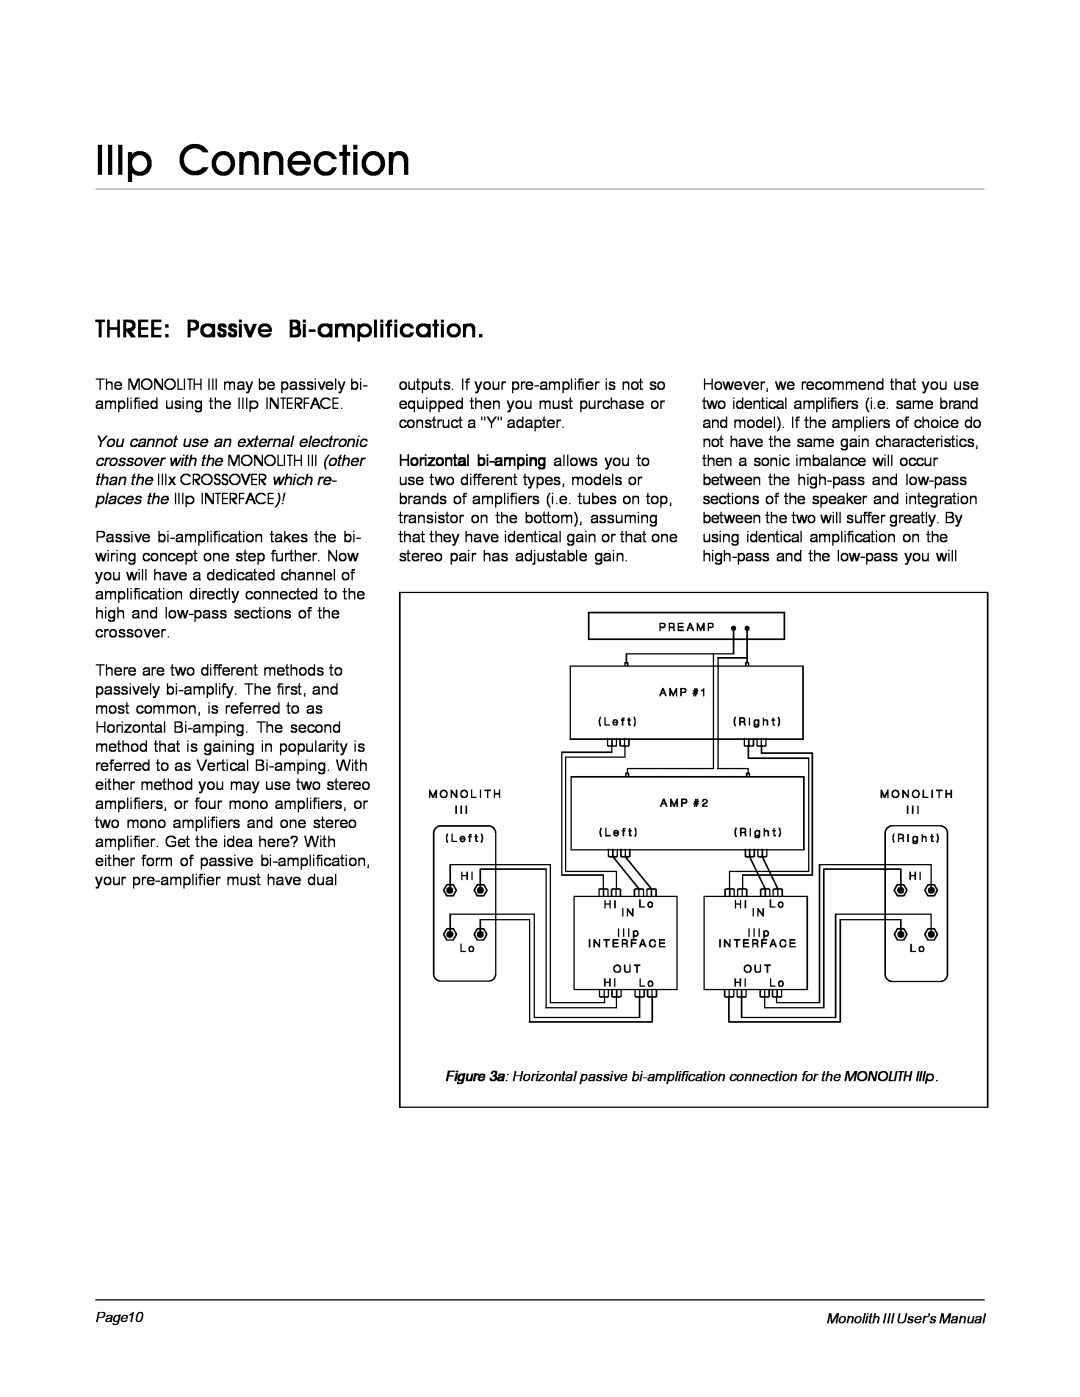 MartinLogan Monolith III user manual THREE Passive Bi-amplification, IIIp Connection, Page10 